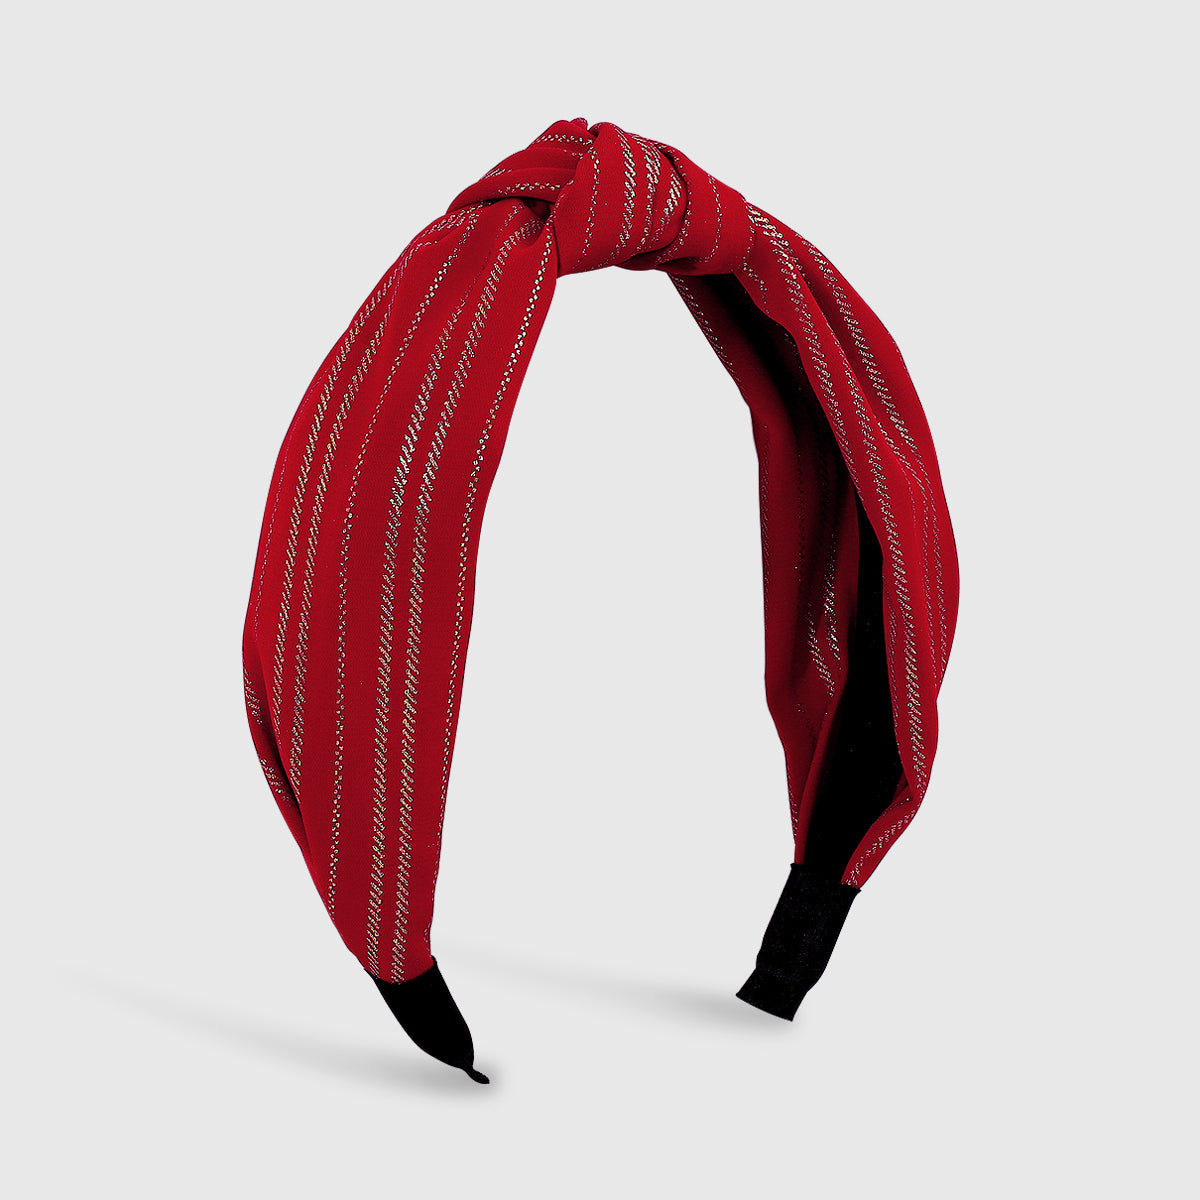 Turban Striped Top Knotted Headband medyjewelry